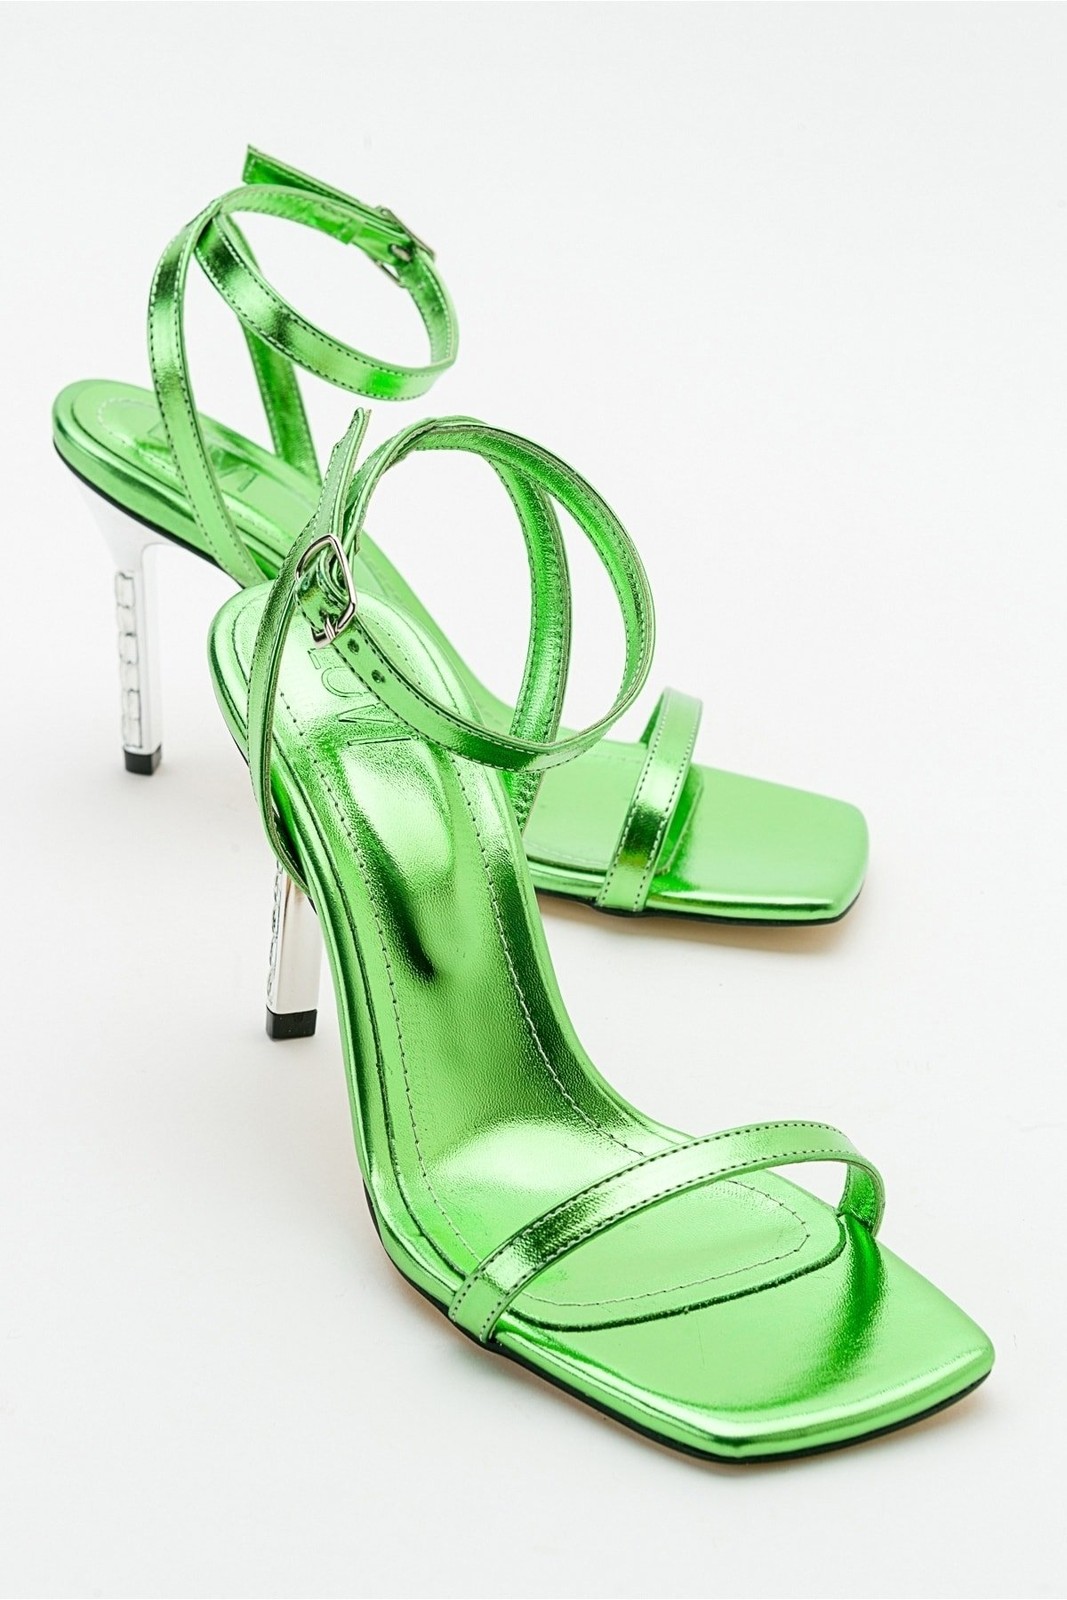 LuviShoes Edwin Women's Metallic Green Heeled Shoes